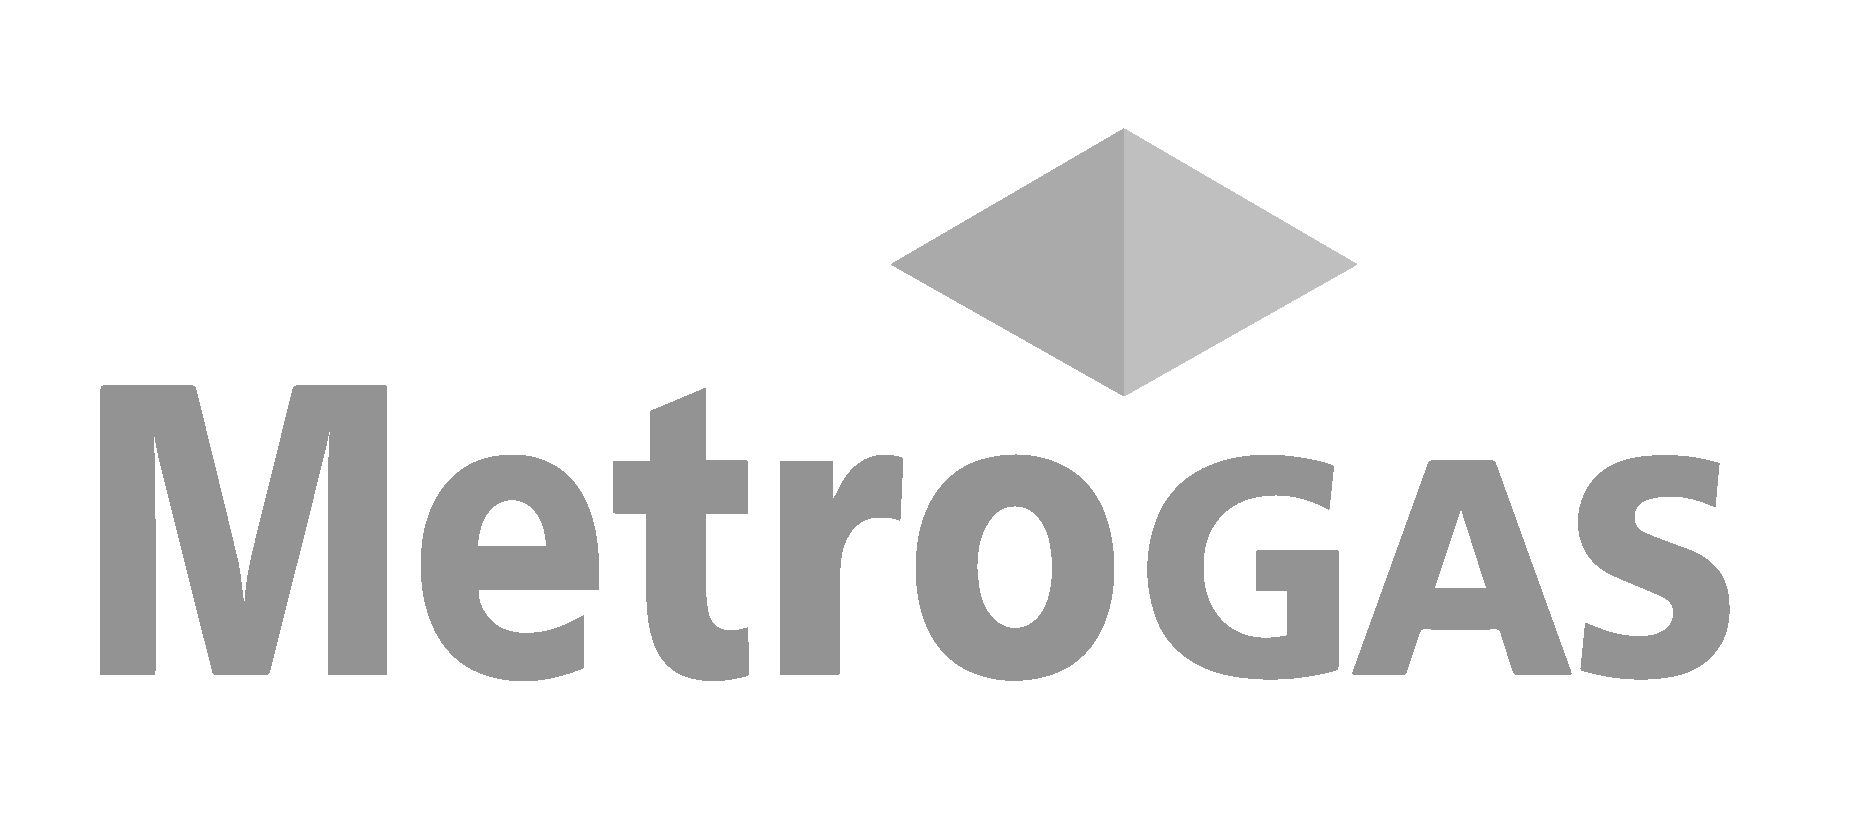 Metrogas-gray